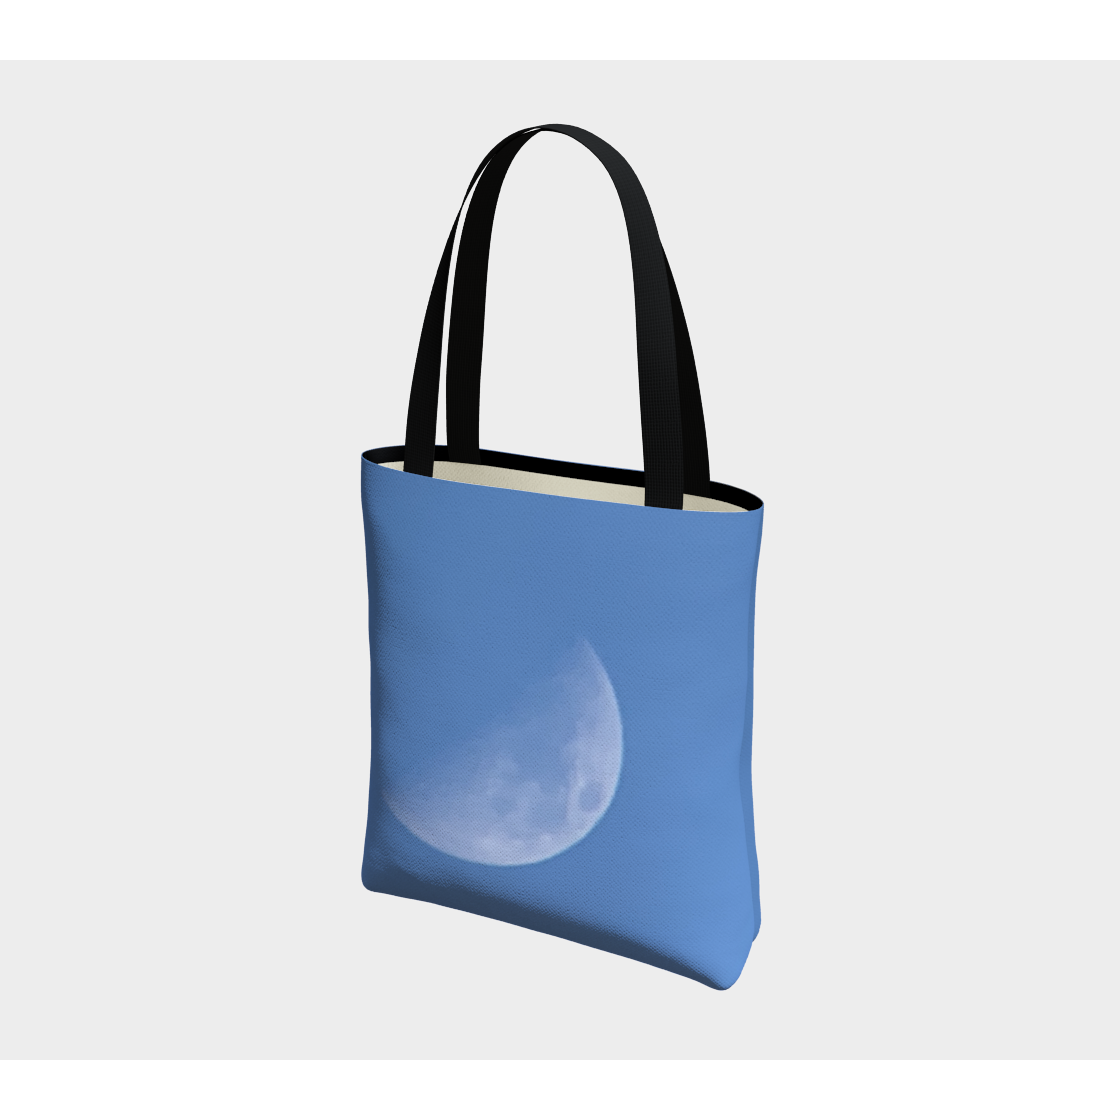 Tote Bag for Women with: Half Moon Design, Light Inside